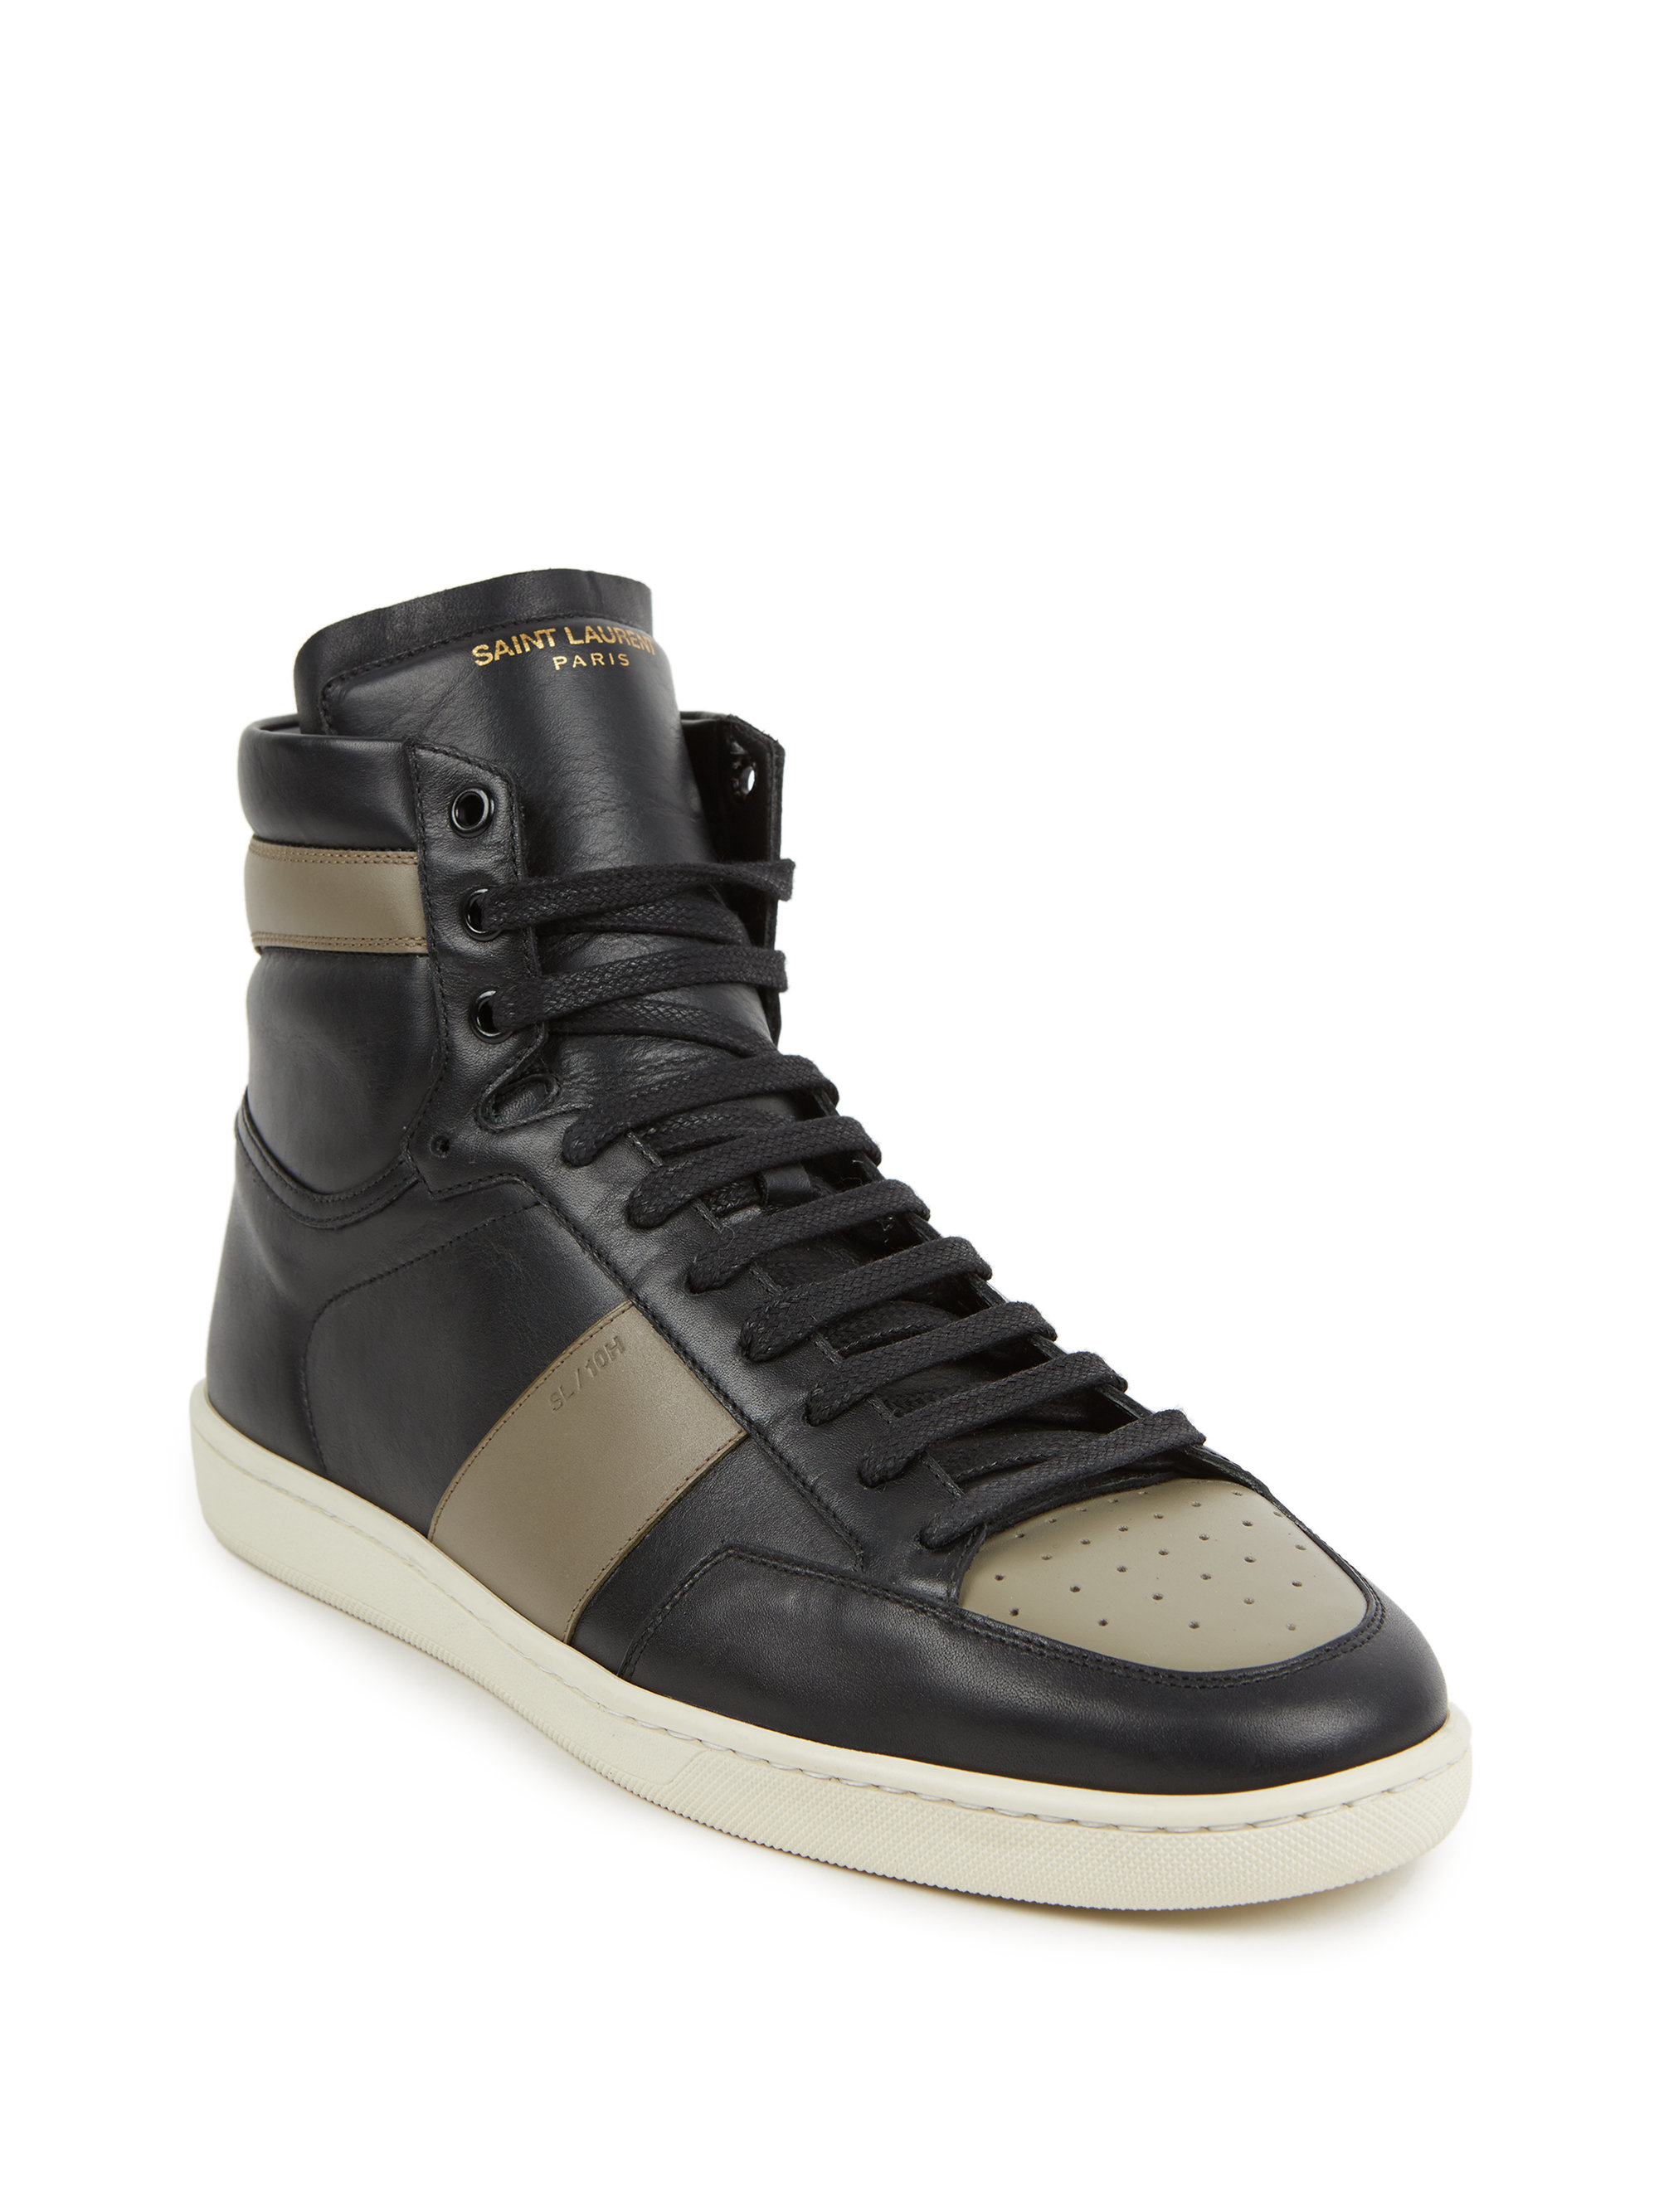 Lyst - Saint Laurent Classic Hi-top Leather Sneakers in Black for Men ...